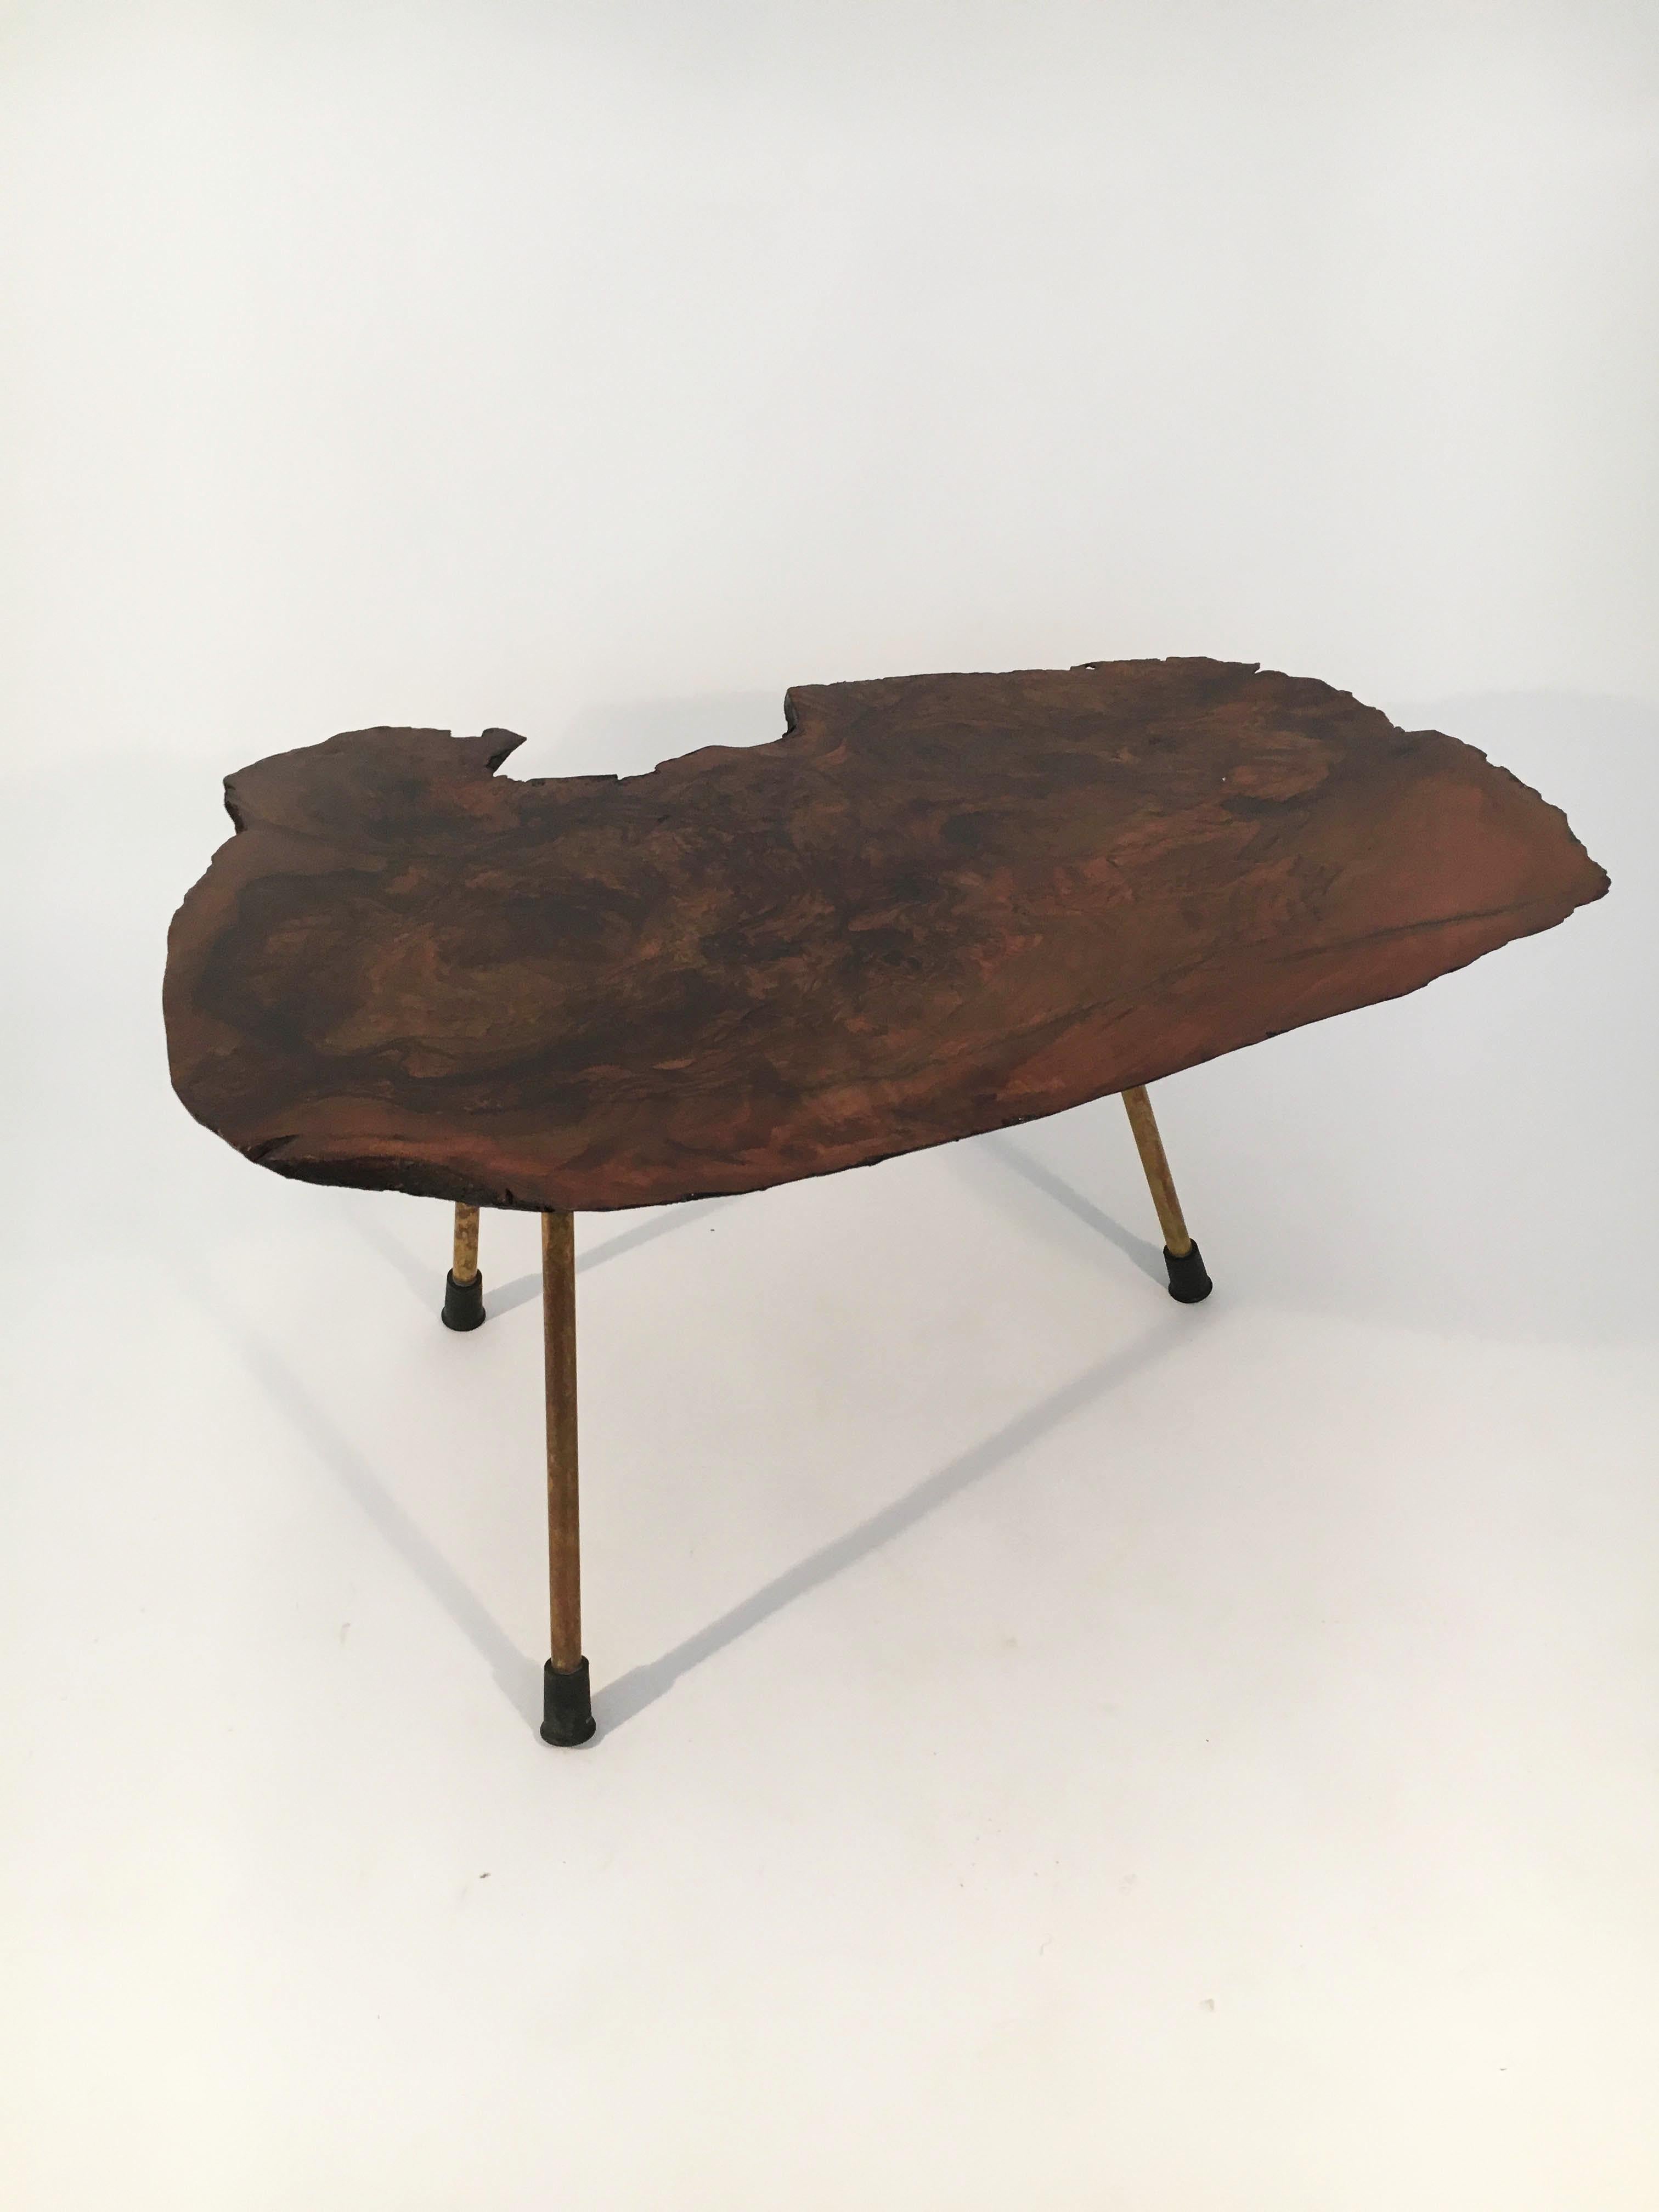 Brass Carl Auböck Original Large Walnut Tree Trunk Table 'Model No. 1' Austria 1950s